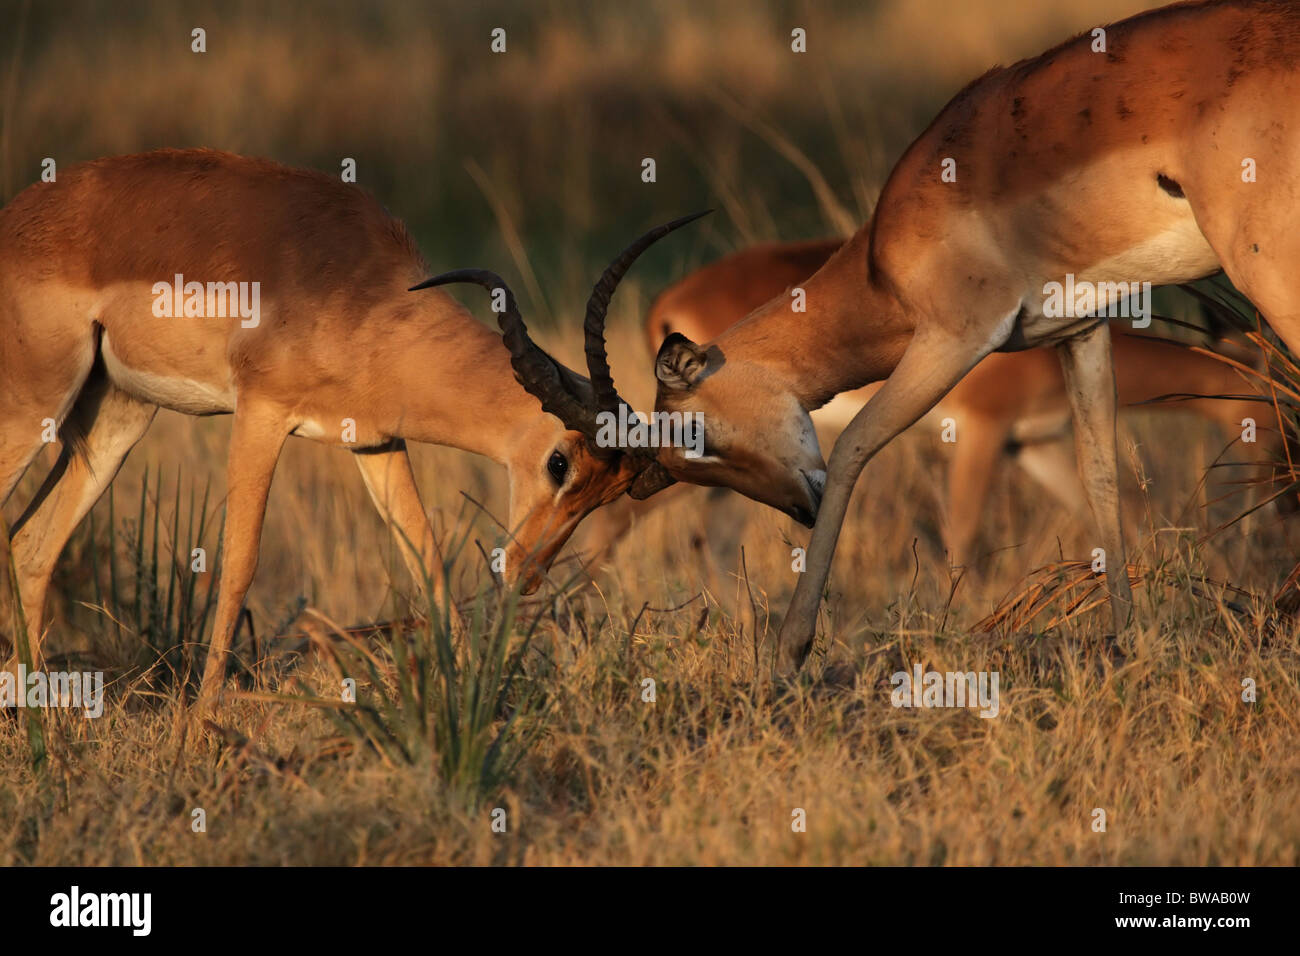 Two fighting Impalas (Aepyceros melampus) in the Okavango Delta, Botswana. Stock Photo